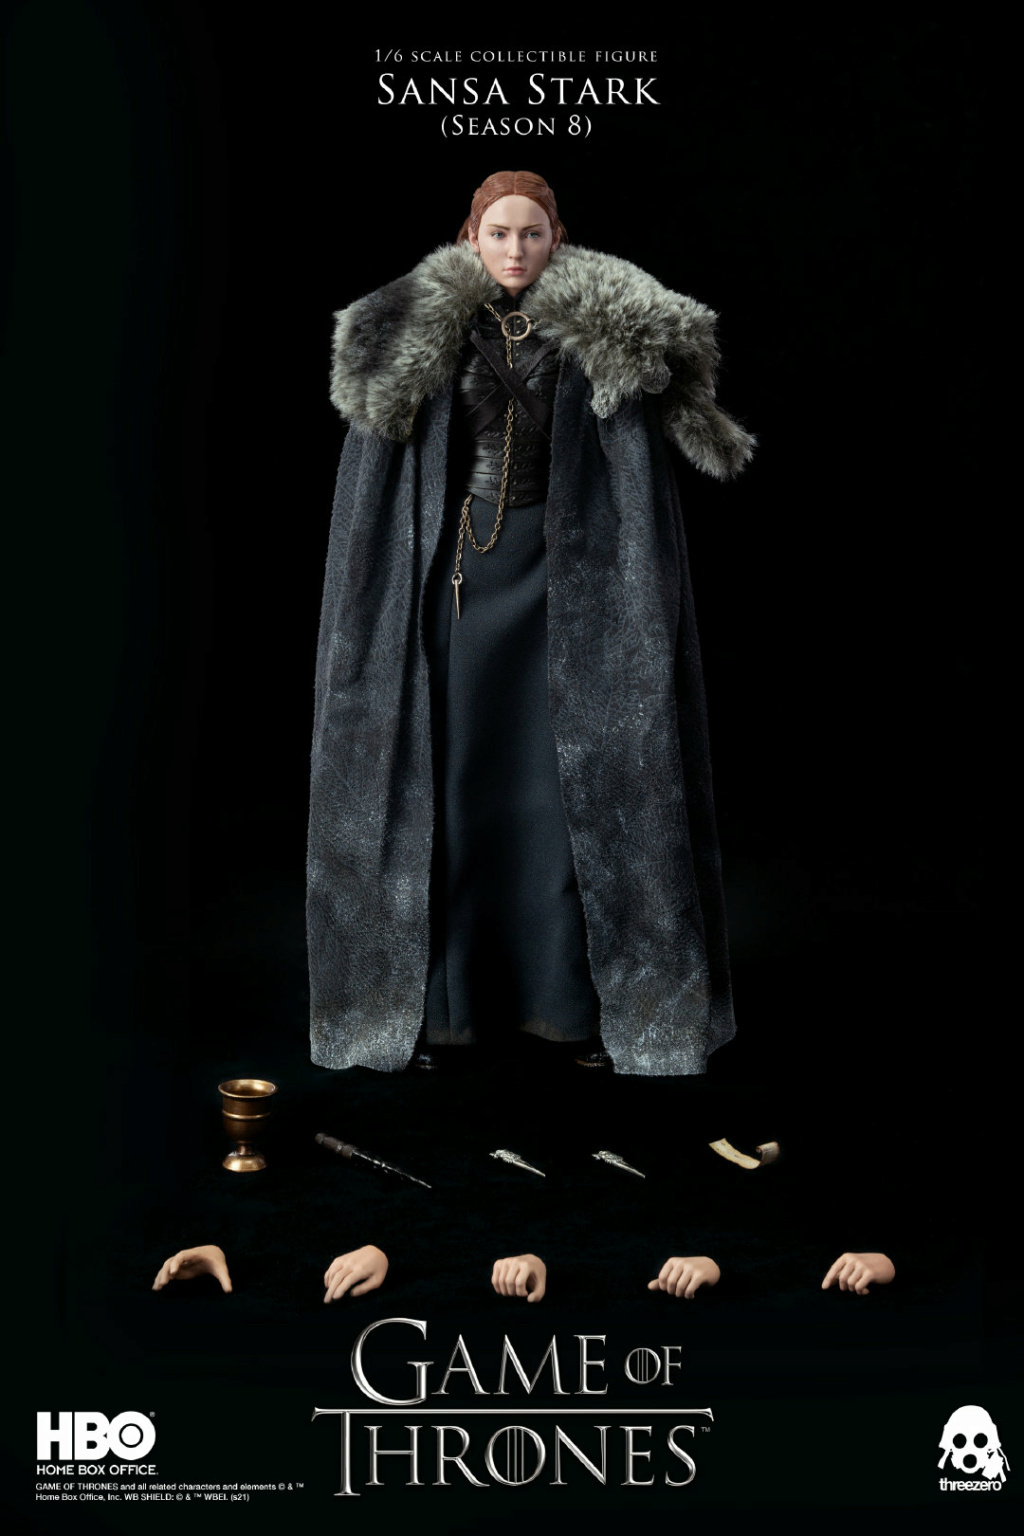 hbo - NEW PRODUCT: Threezero: 1/6 "A Song of Ice and Fire: Game of Thrones" Sansa Stark/Sansa Stark Action Figure 10184111